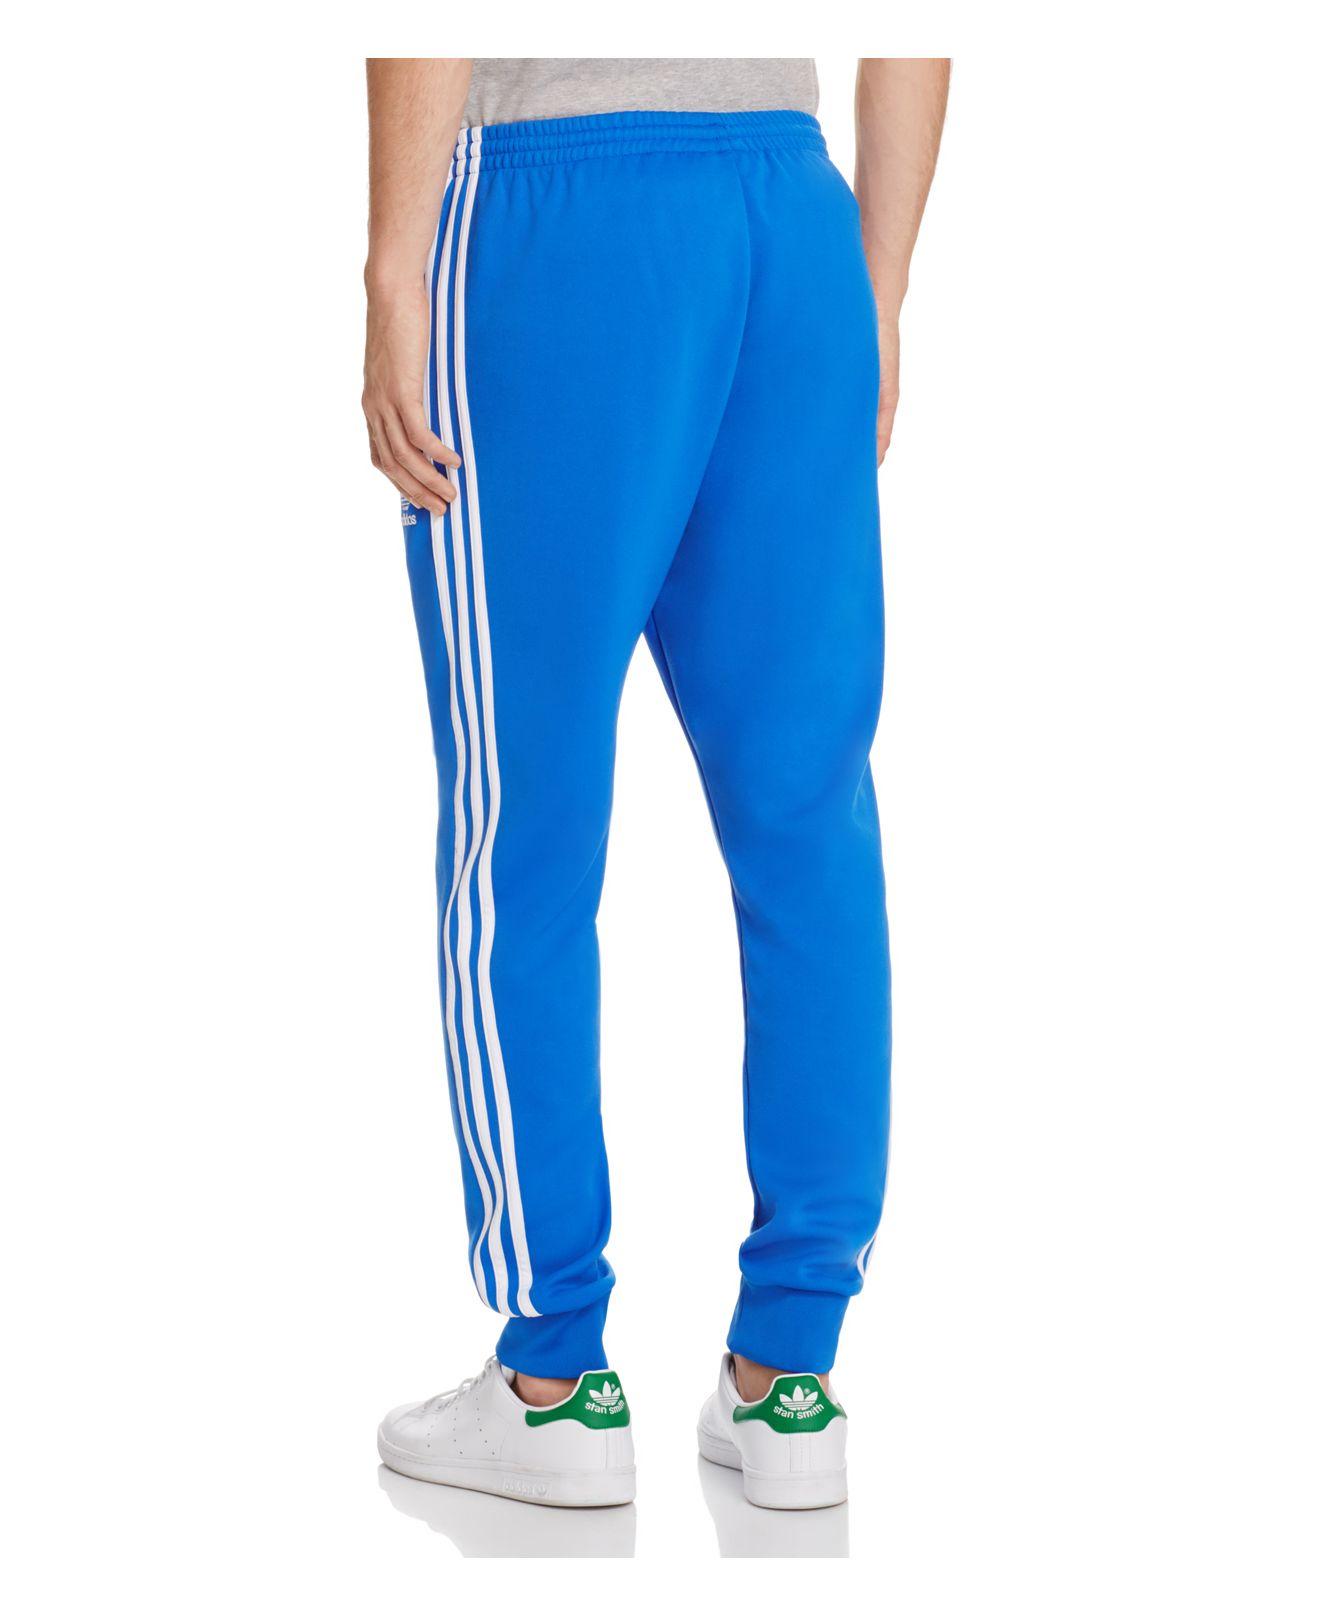 Lyst - Adidas originals Track Pants in Blue for Men